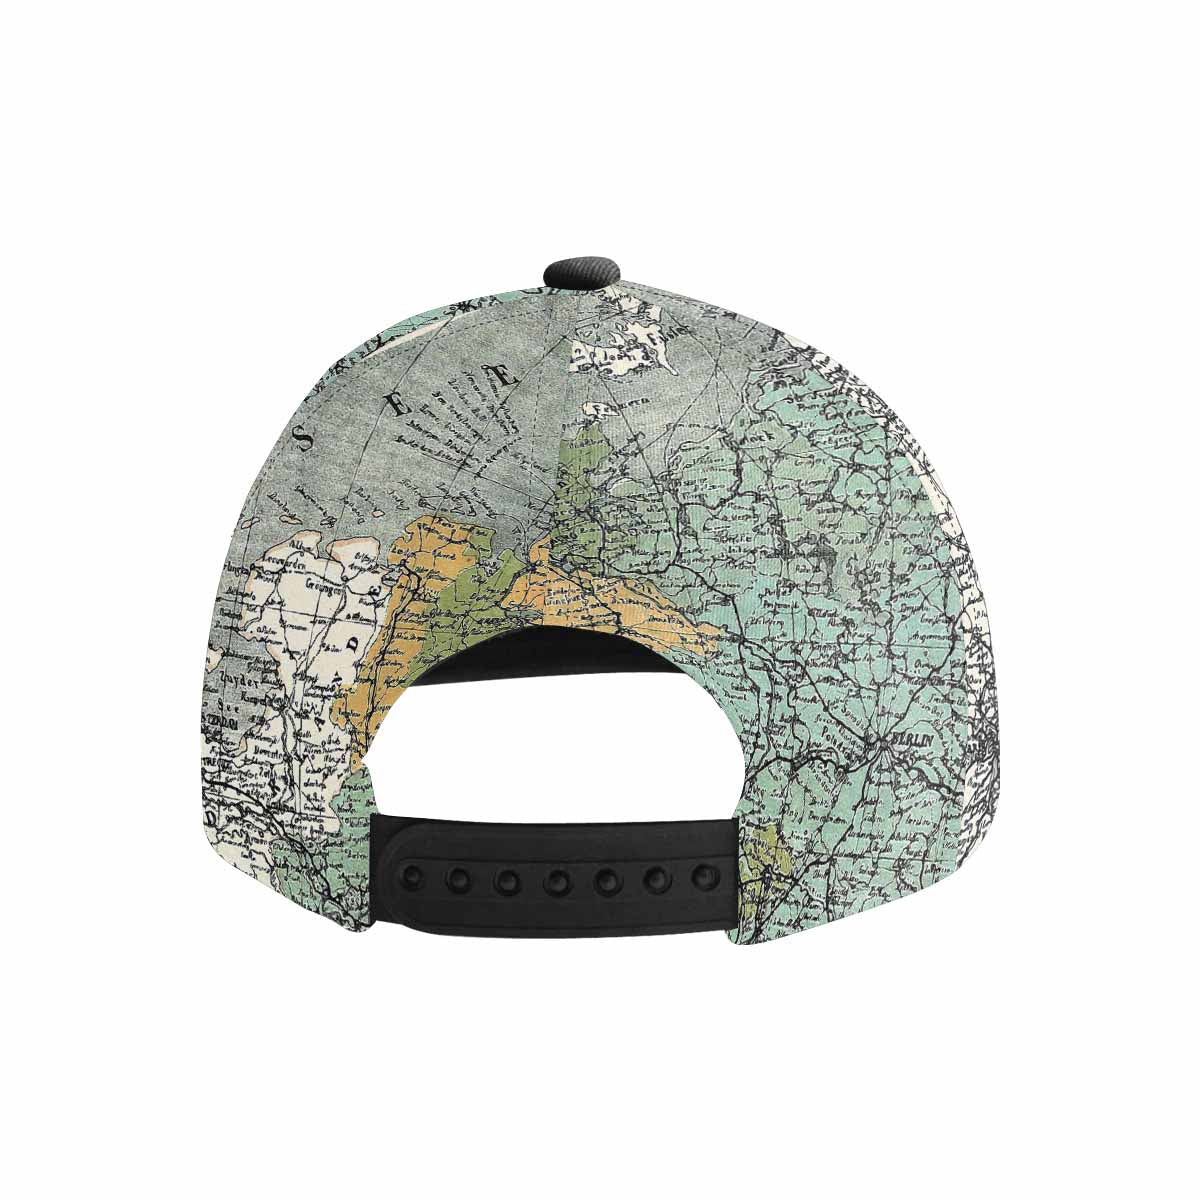 Antique Map design mens or womens deep snapback cap, trucker hat, Design 18